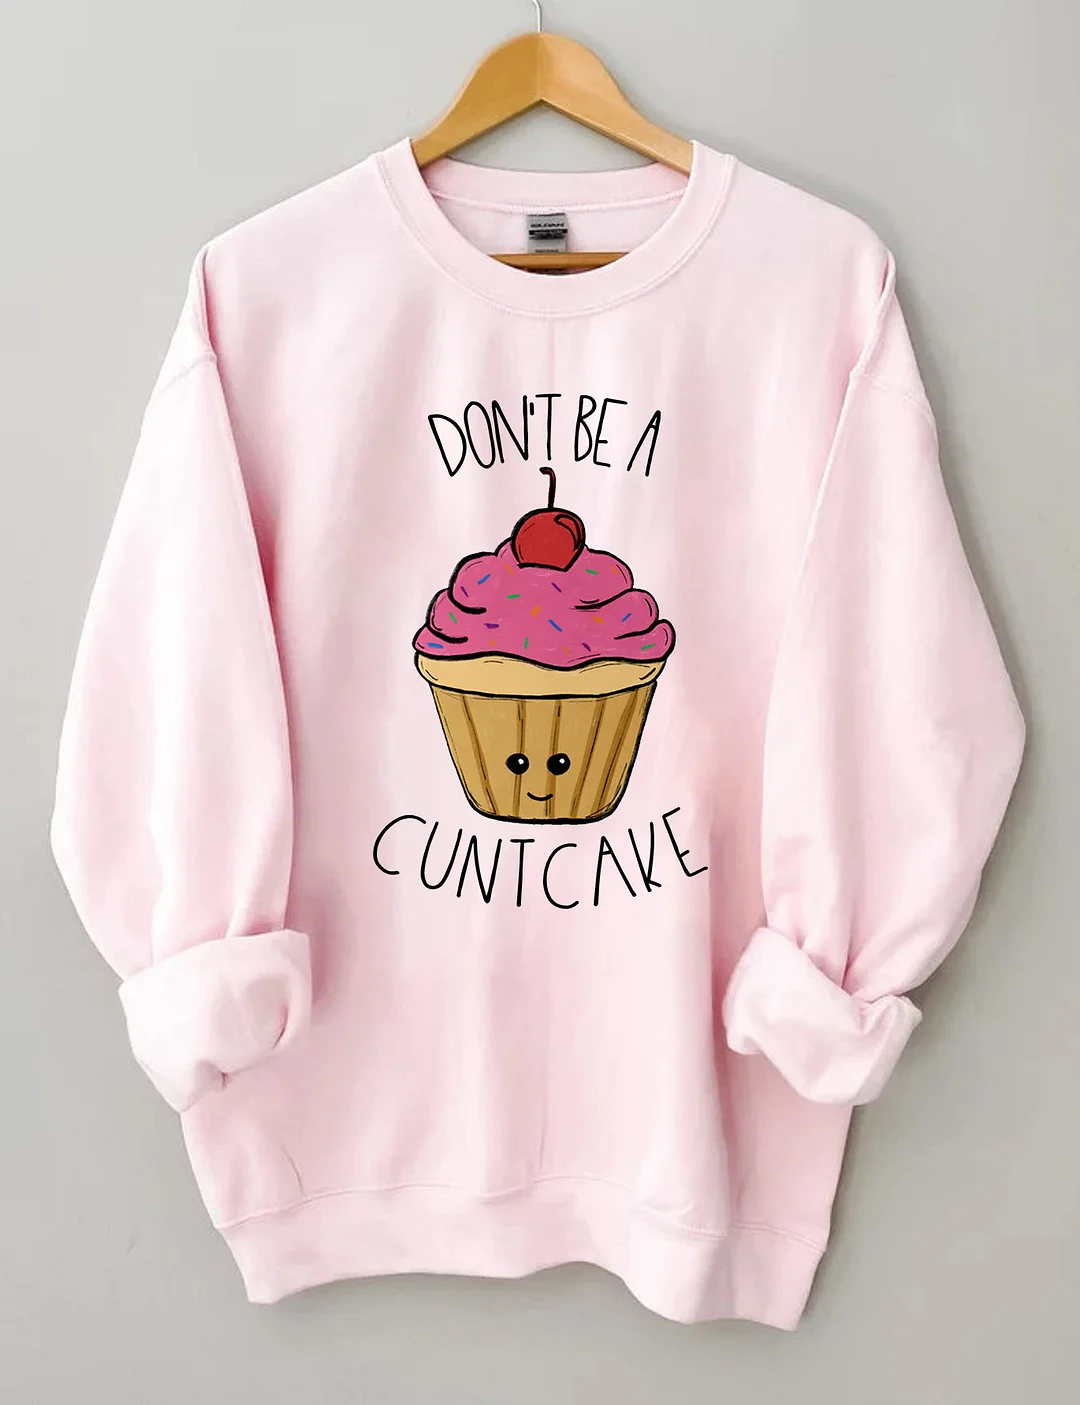 Don't Be A Cuntcake/Twatwaffle Sweatshirt